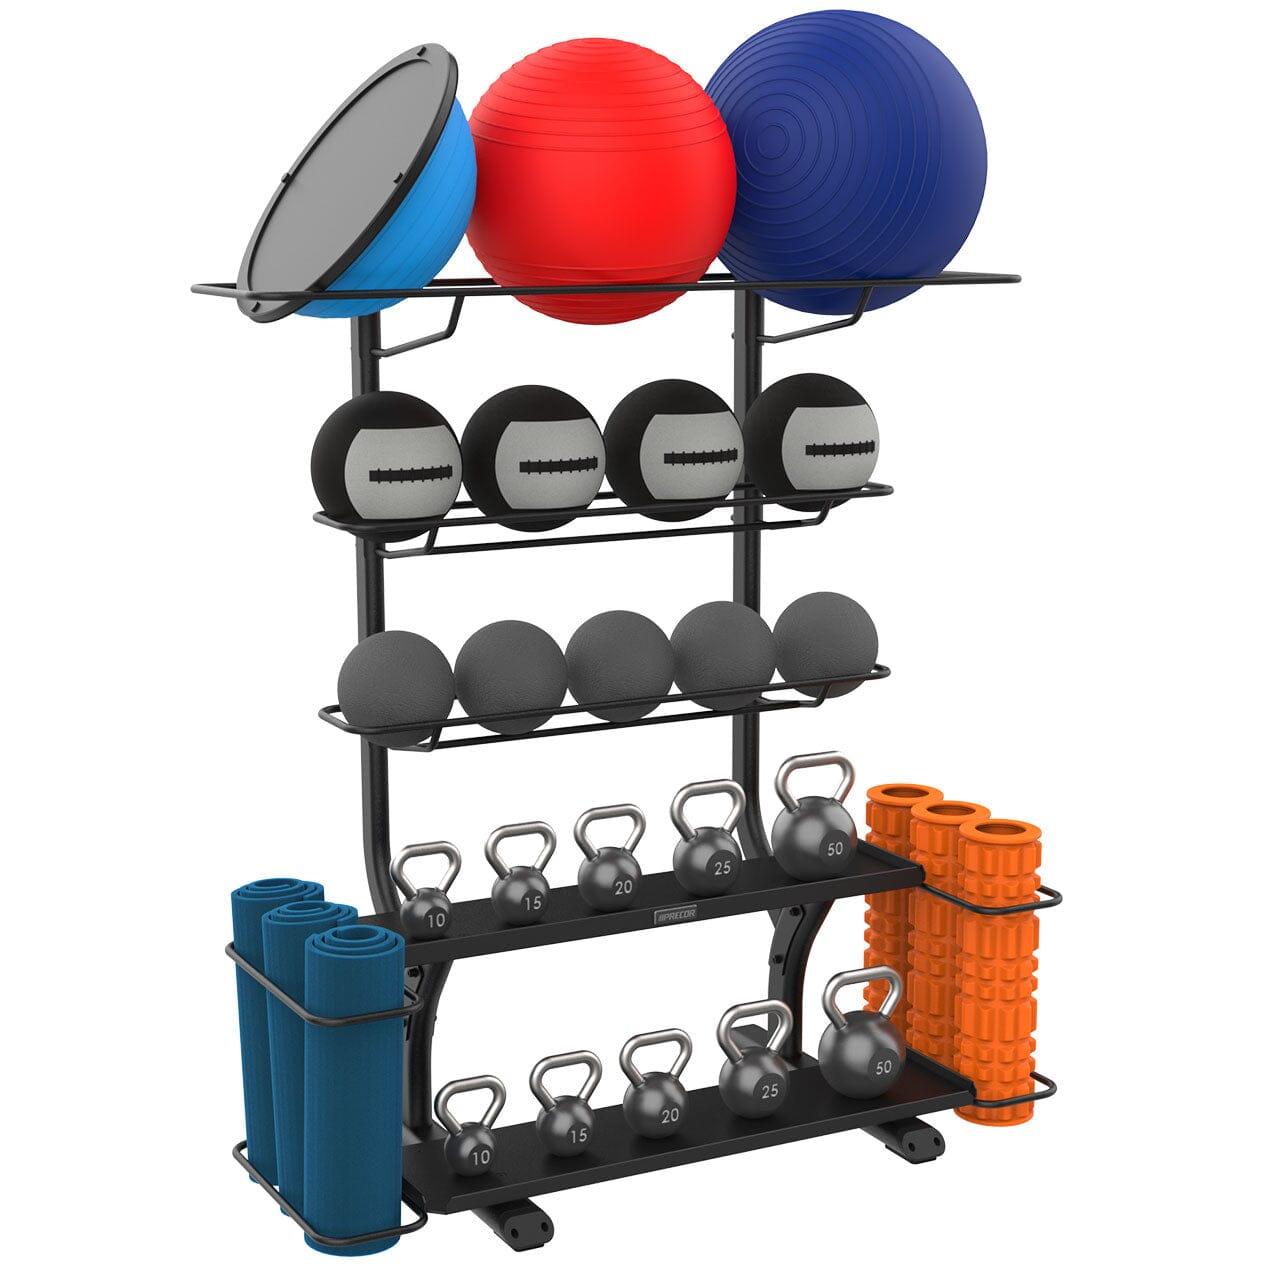 Precor Vitality Series Accessory Racks (VBR 6820) Weight Storage Precor 